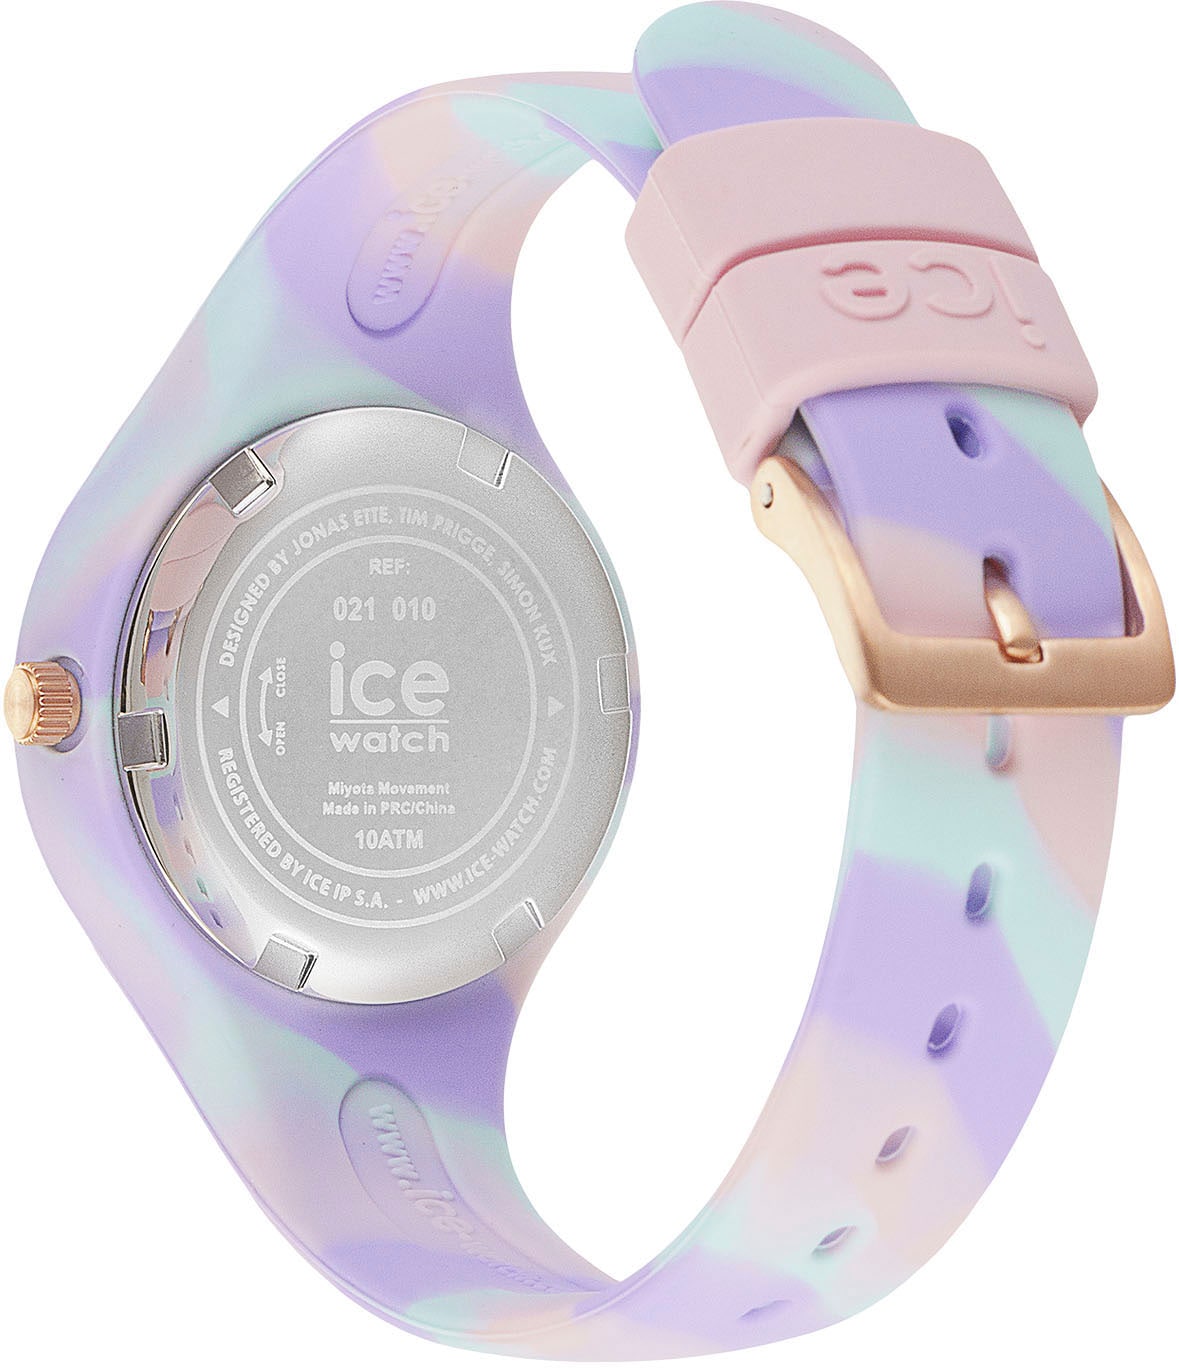 ice-watch online Geschenk ideal dye - 3H, and Sweet OTTO Quarzuhr Extra-Small »ICE - lilac tie 021010«, bei als auch -